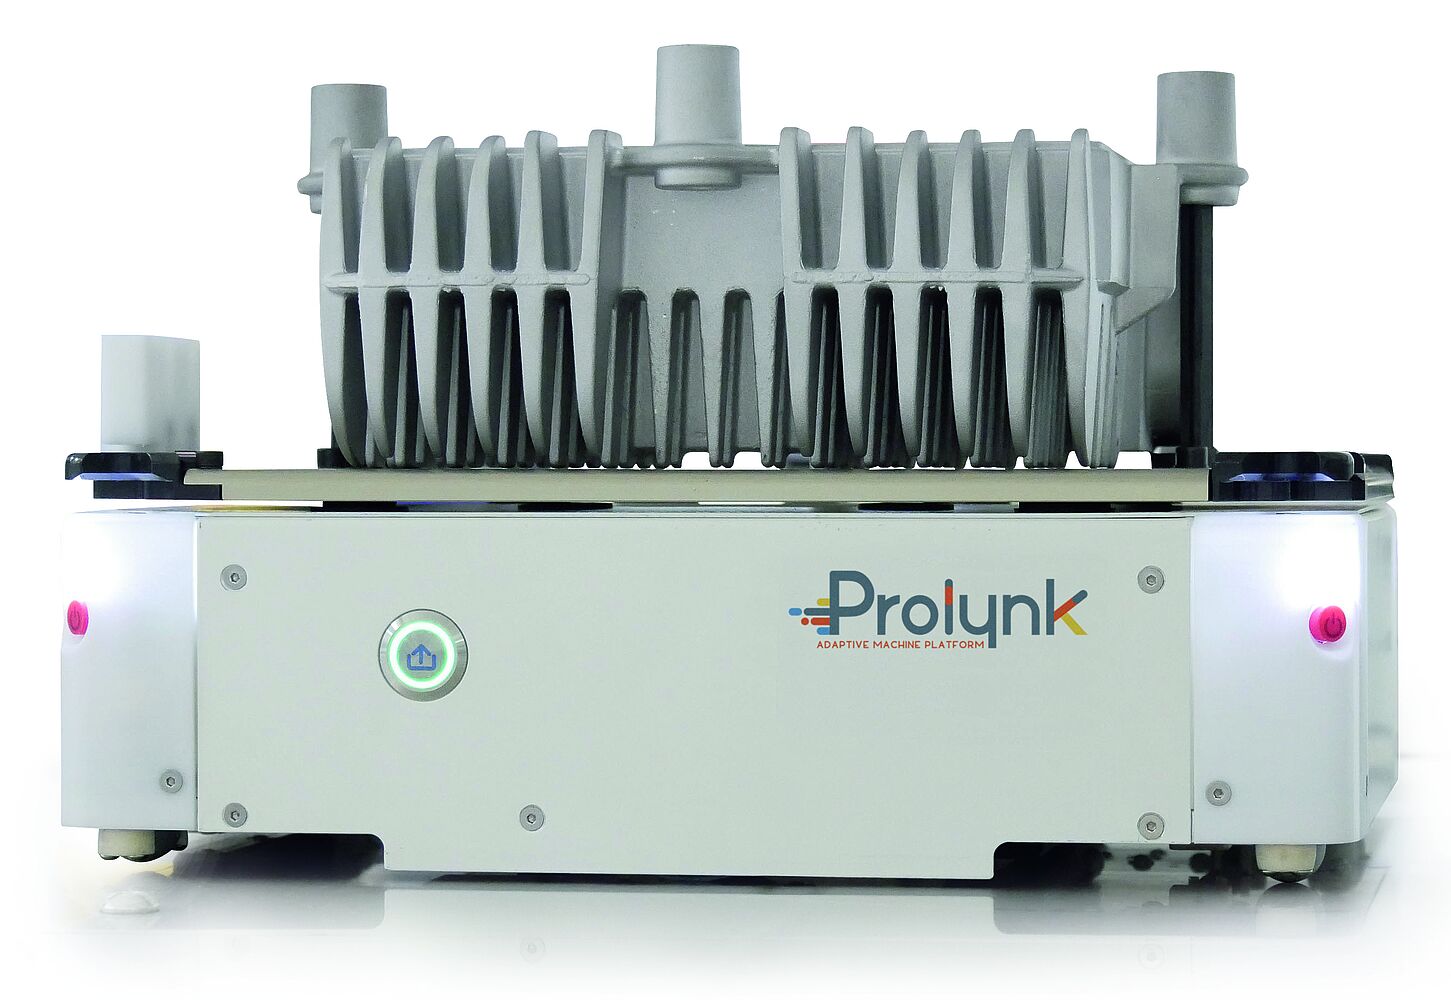 Brushless DC-Motors in adaptive machine platform Prolynk